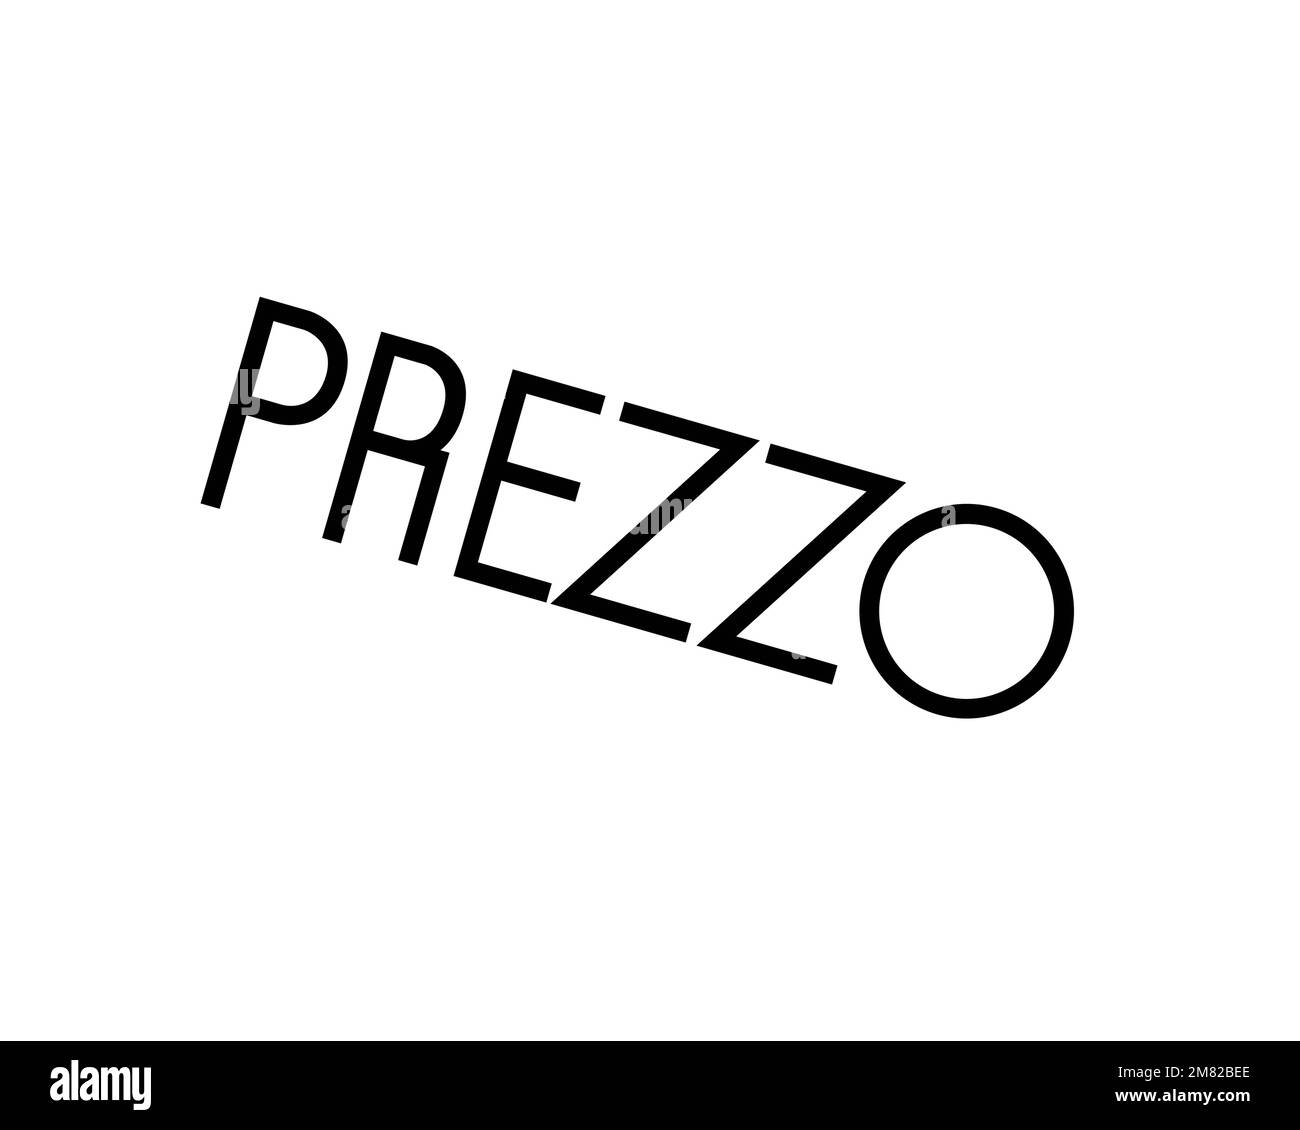 Prezzo restaurant, rotated logo, white background B Stock Photo